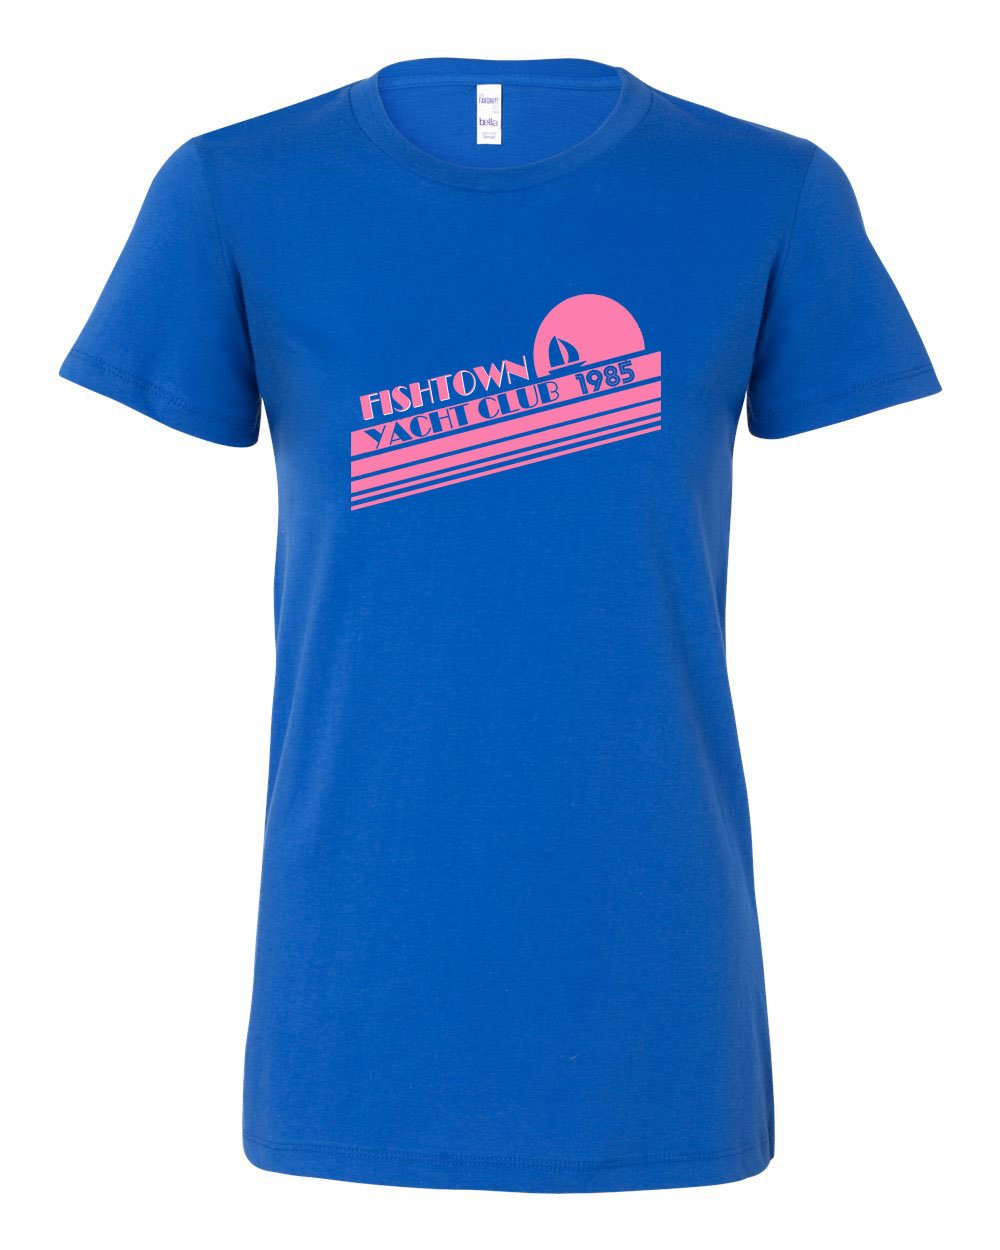 Fishtown Yacht Club LADIES Junior-Fit T-Shirt